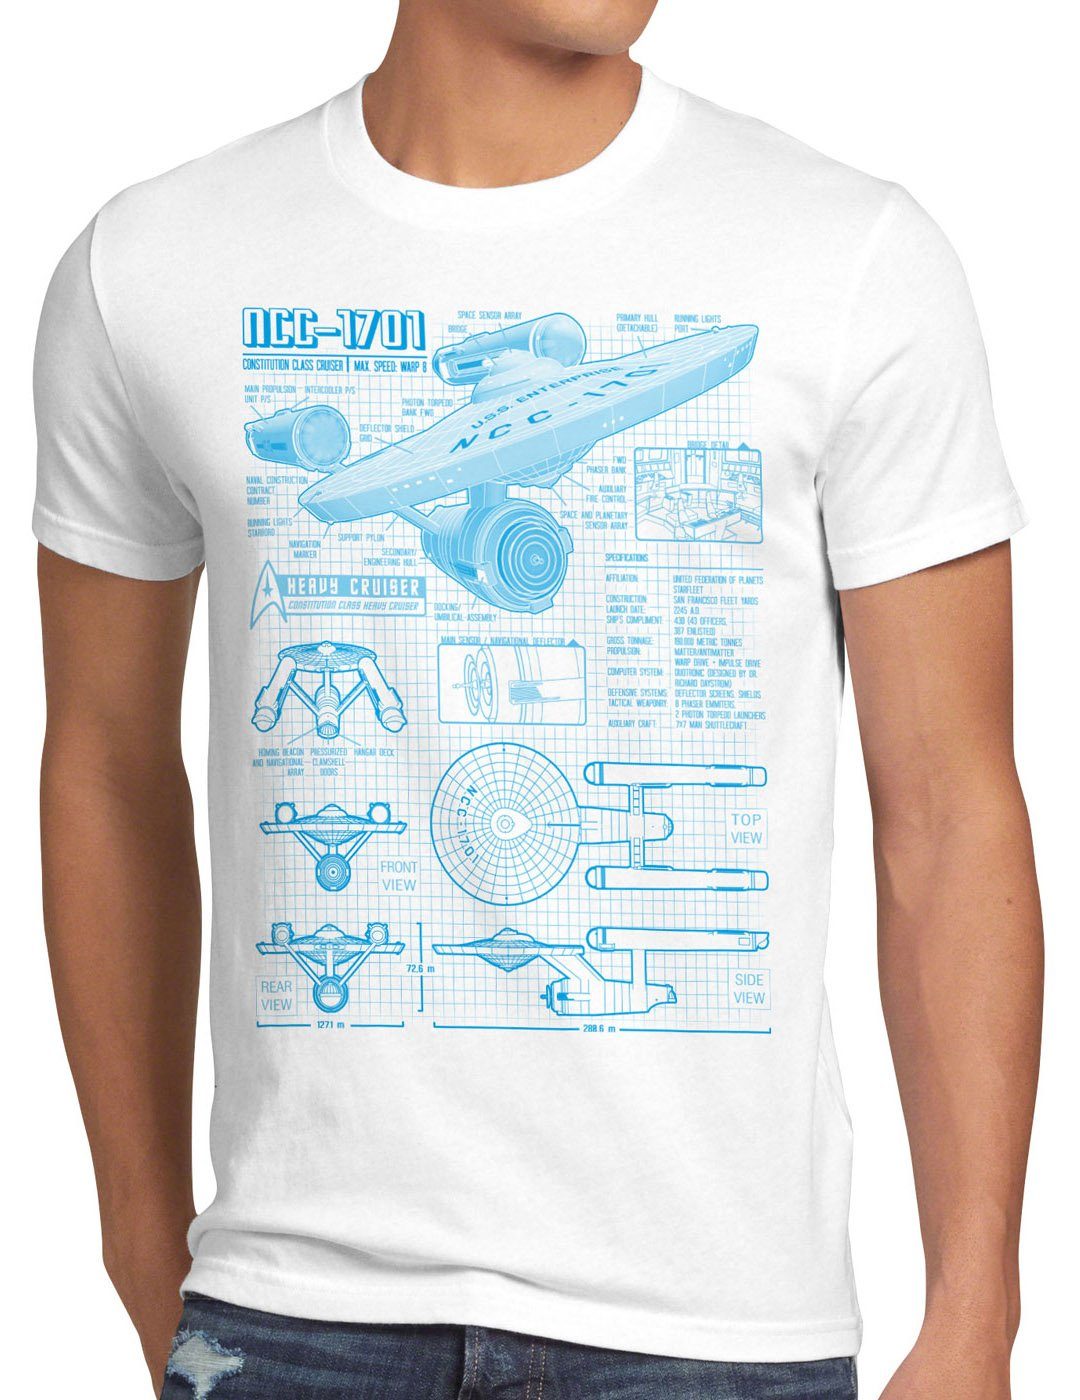 style3 Print-Shirt Herren T-Shirt NCC-1701 christopher pike trek trekkie star sternenflotte klingon weiß